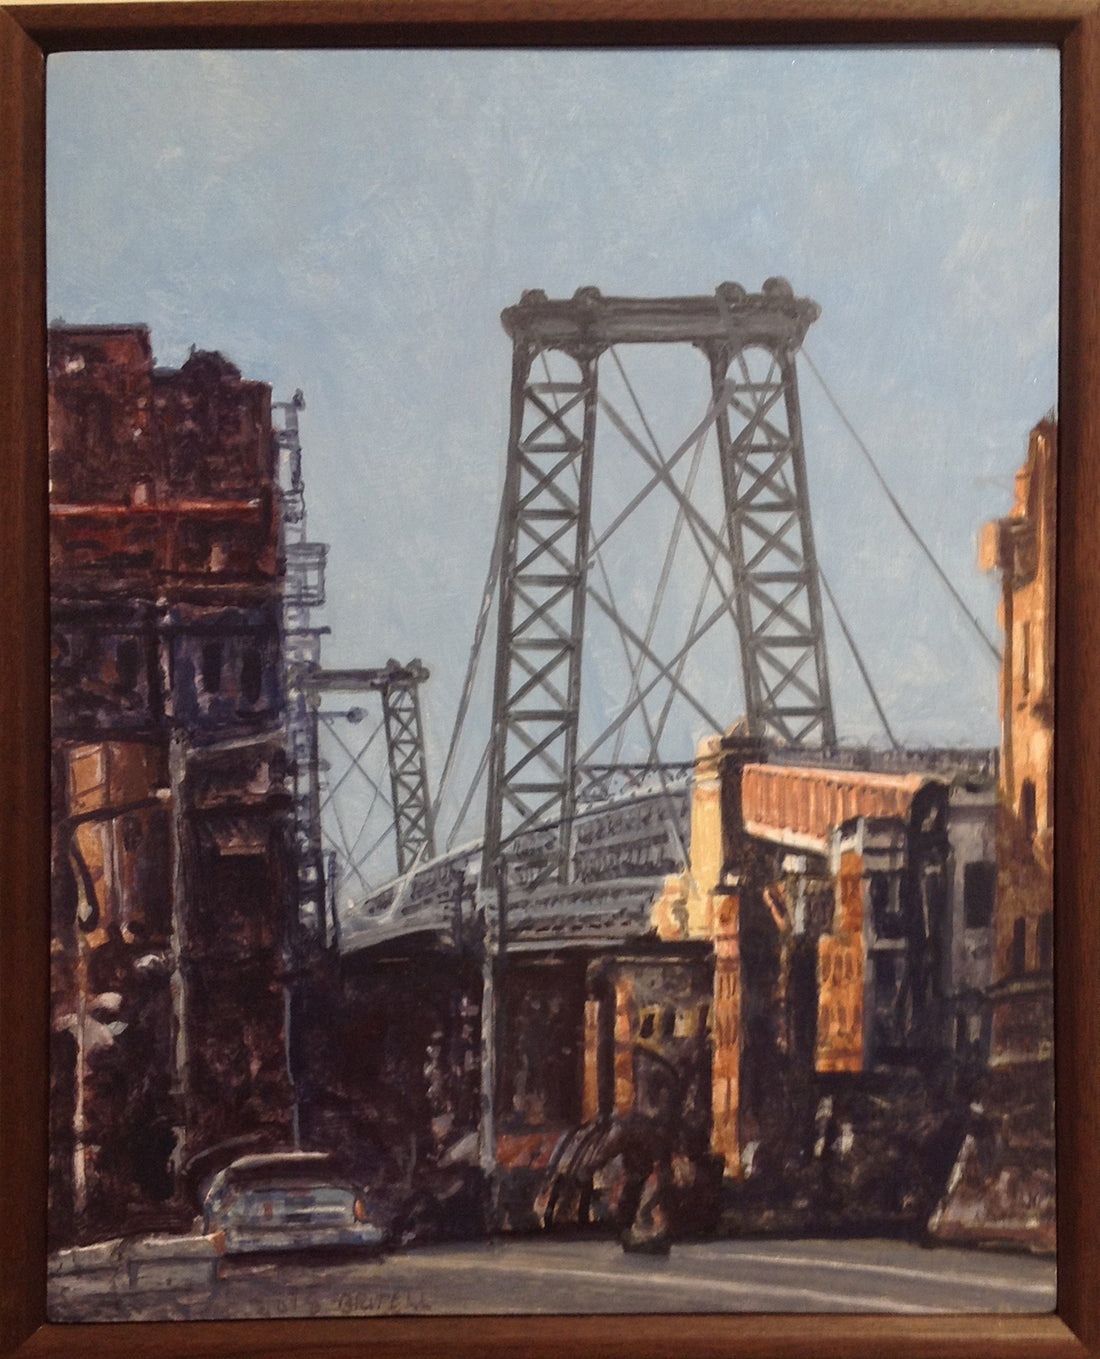 Williamsburg Bridge from The Brooklyn Side